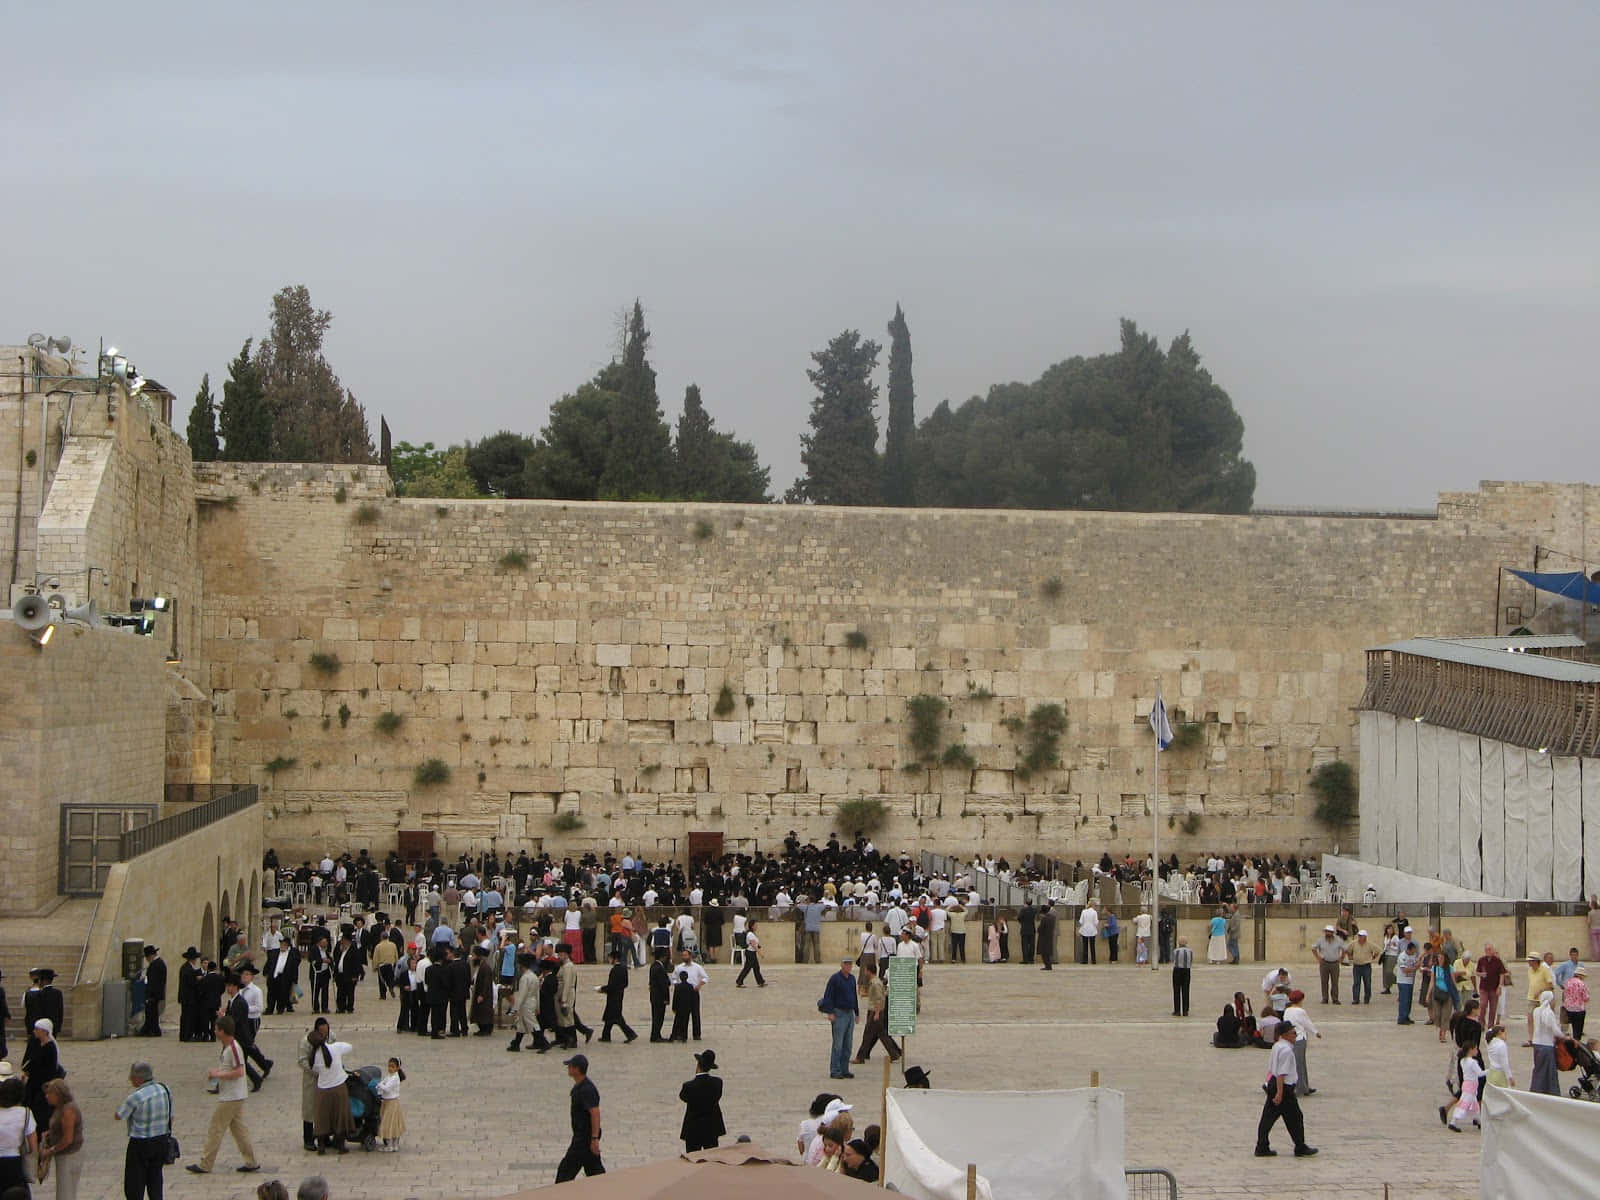 Jerusalemkritisiert Die Klagemauer In Israel. Wallpaper